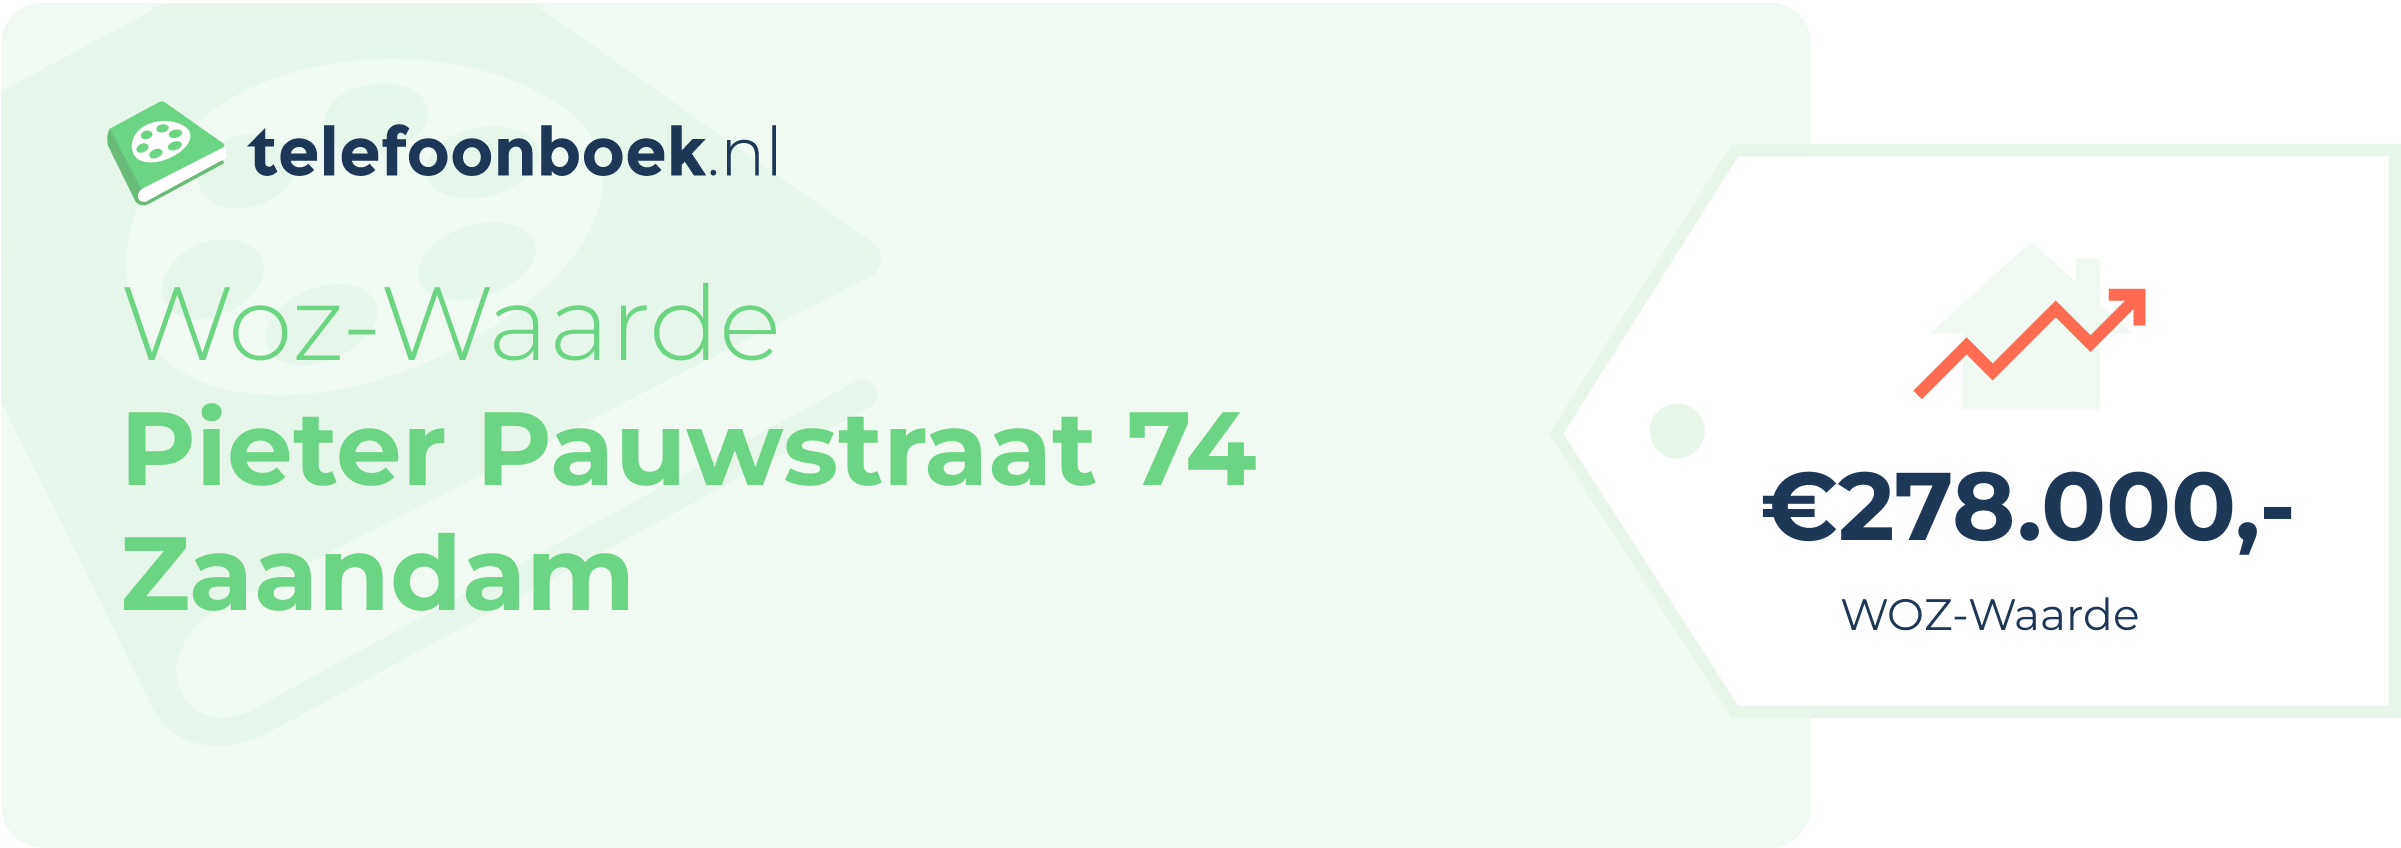 WOZ-waarde Pieter Pauwstraat 74 Zaandam